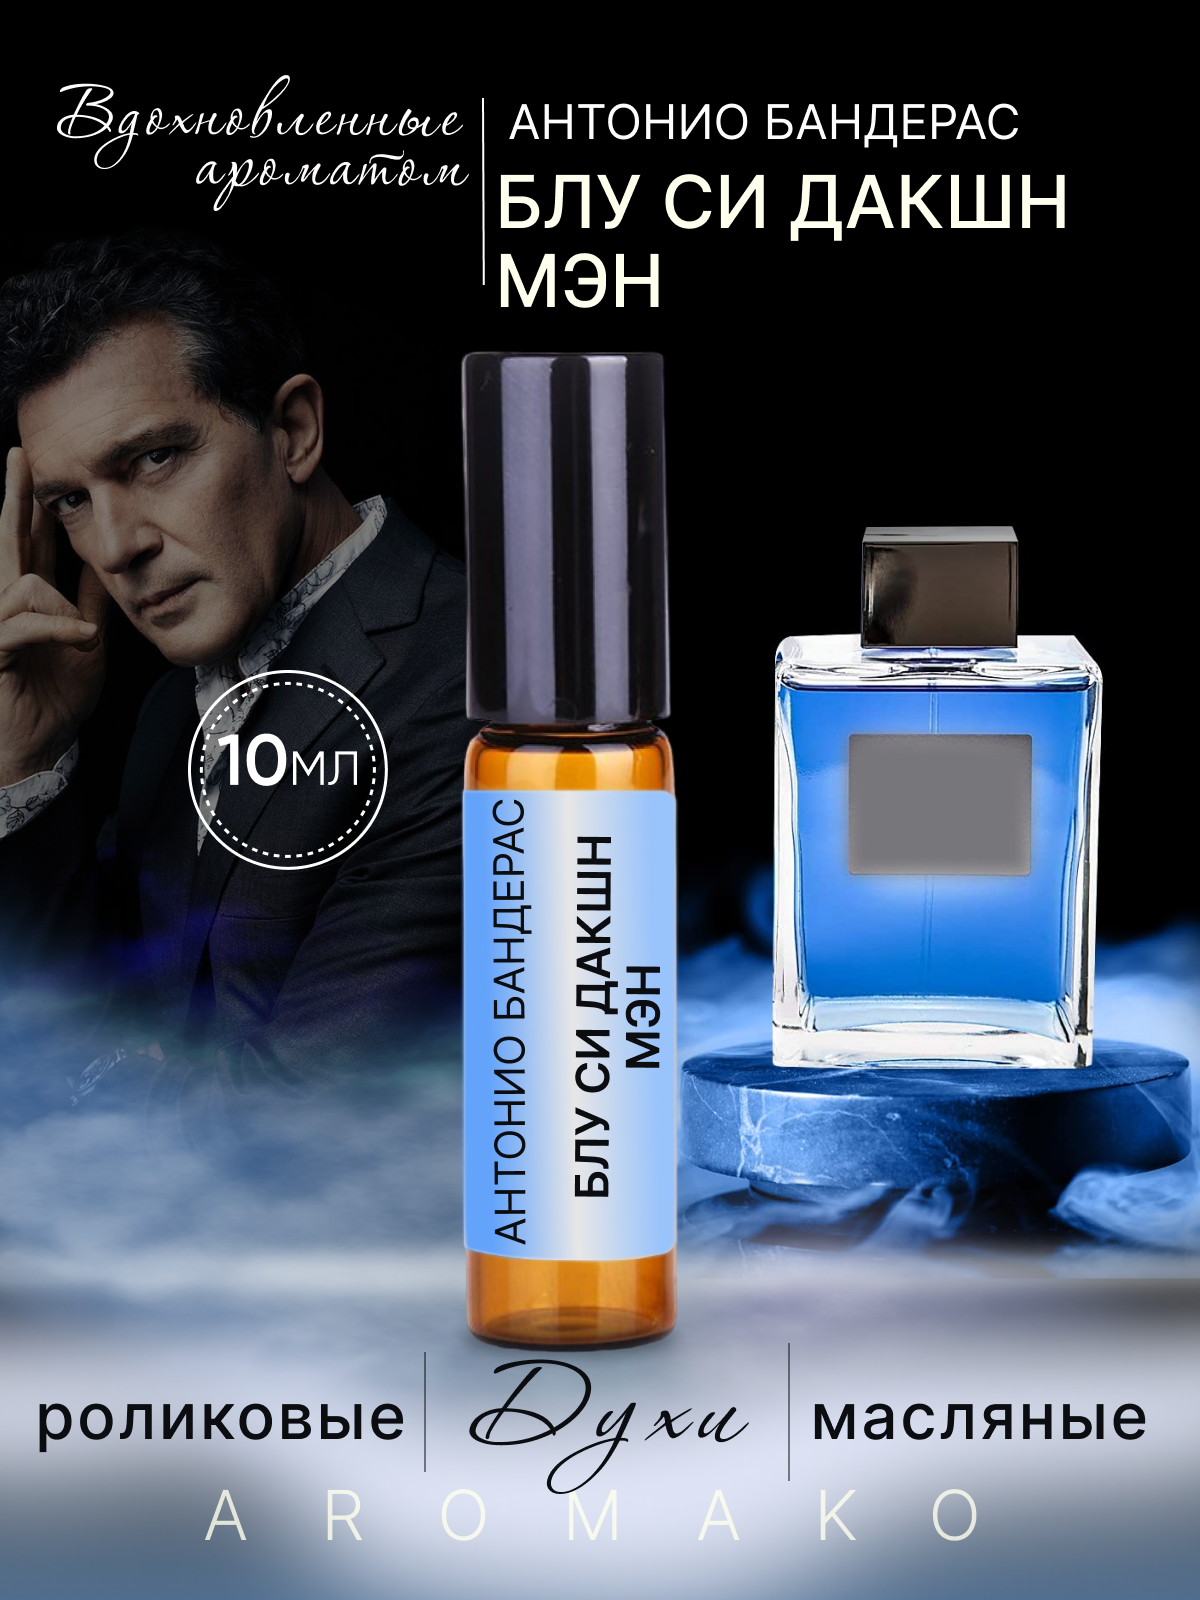 Духи масляные, парфюм - ролик по мотивам Antonio Banderas, Blue Seduction 10 мл, AROMAKO